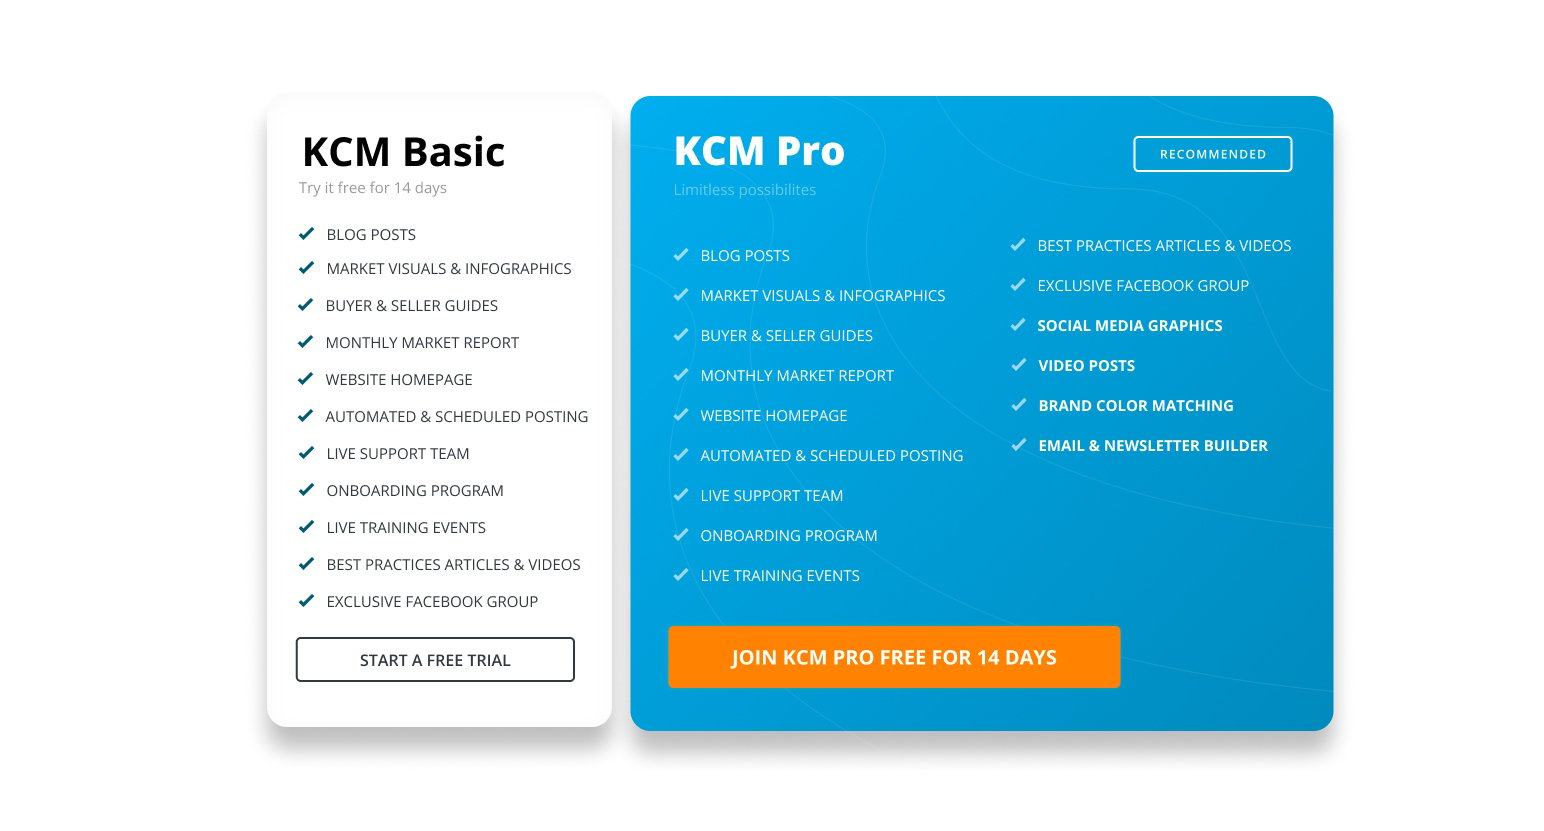 kcm basic and pro benefits